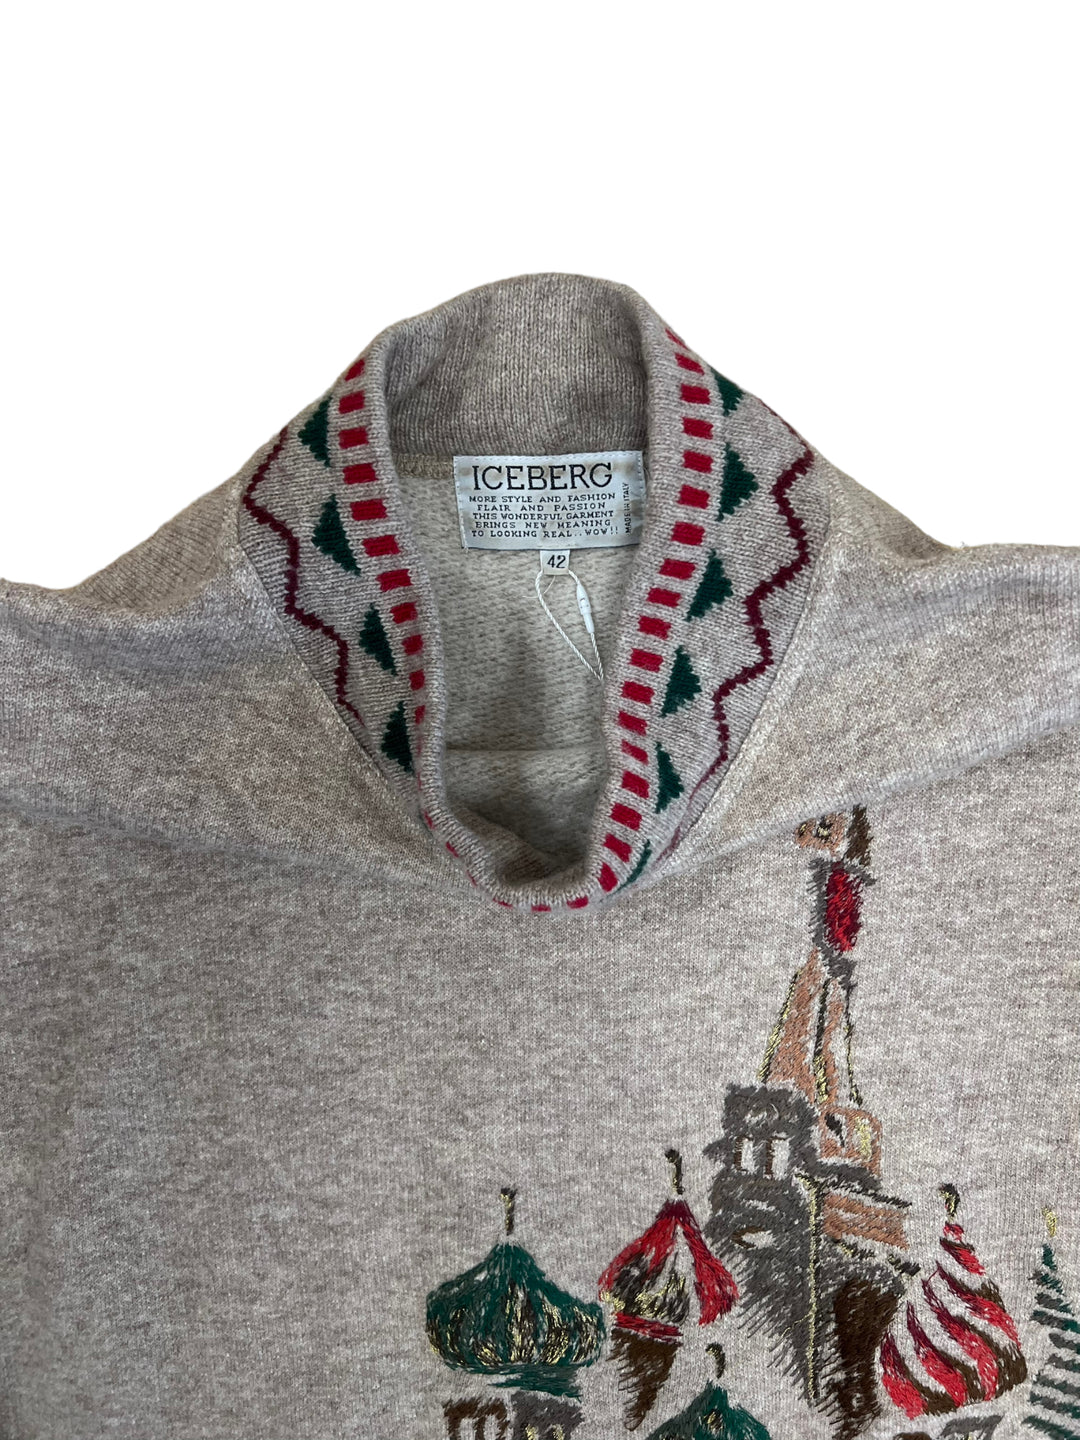 Rare Iceberg Soviet Union Vintage Sweater Men's Medium